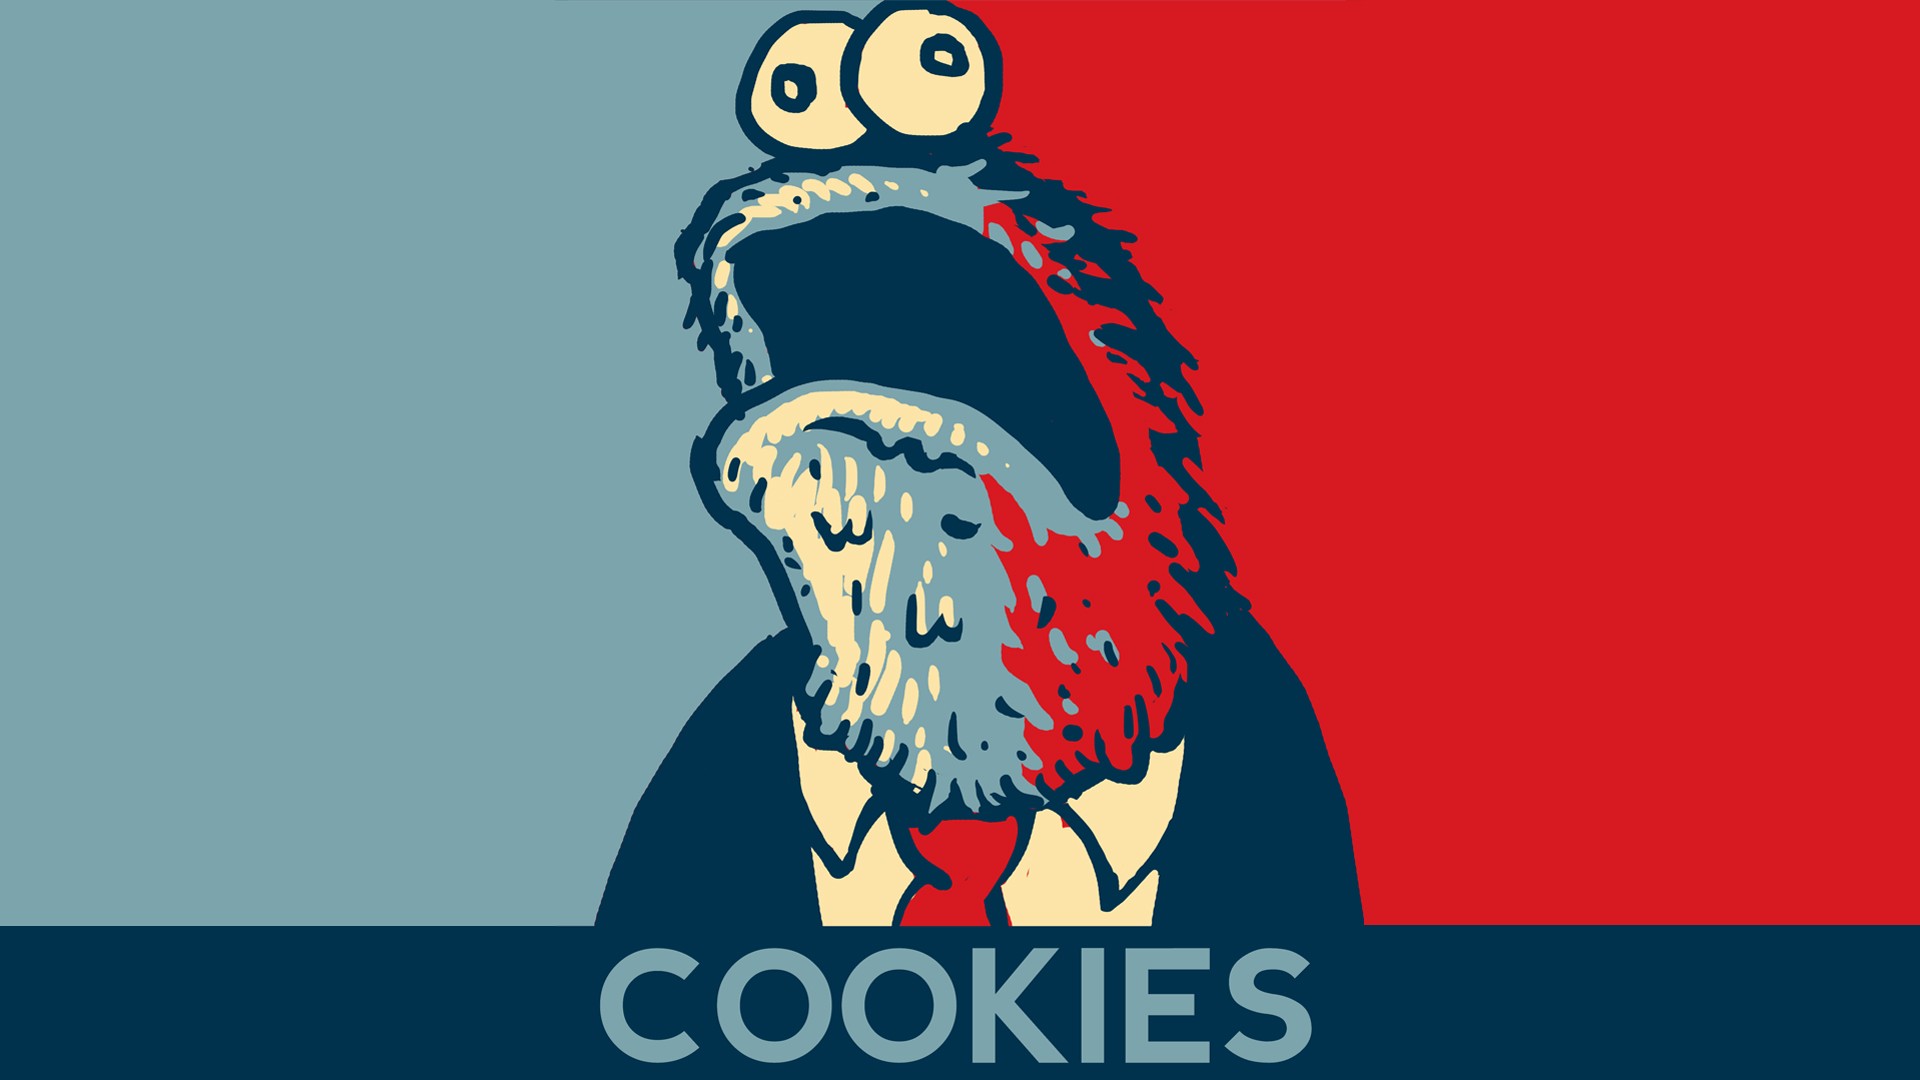 Presidents Politics Minimalism Hope Posters Cookie Monster Sesame Street Humor 1920x1080